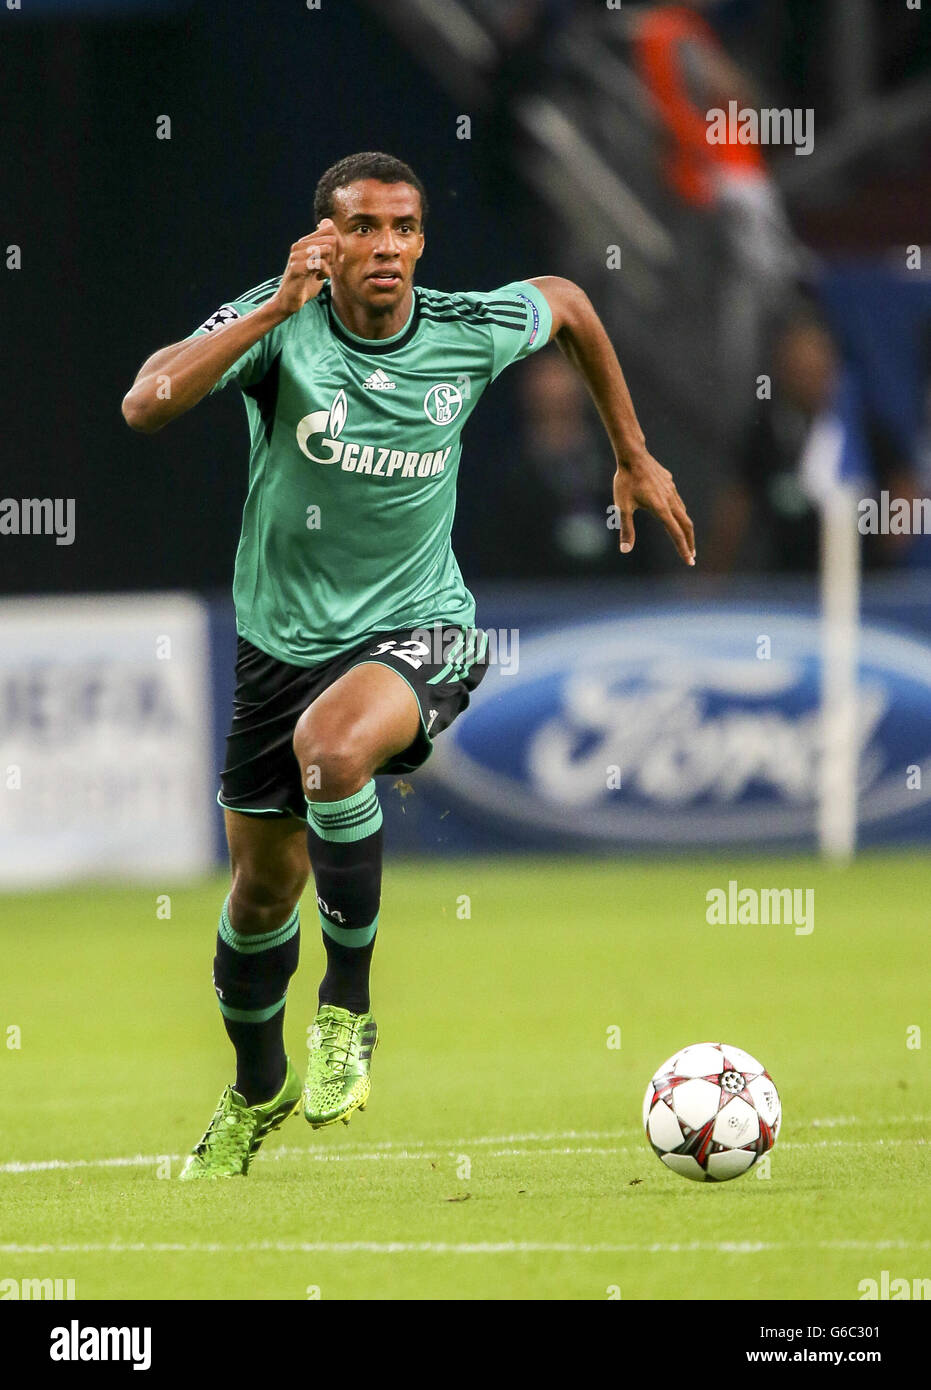 Soccer - UEFA Champions League - Play-Offs - Schalke 04 v PAOK - Veltins-Arena. Joel Matip, Schalke 04 Stock Photo